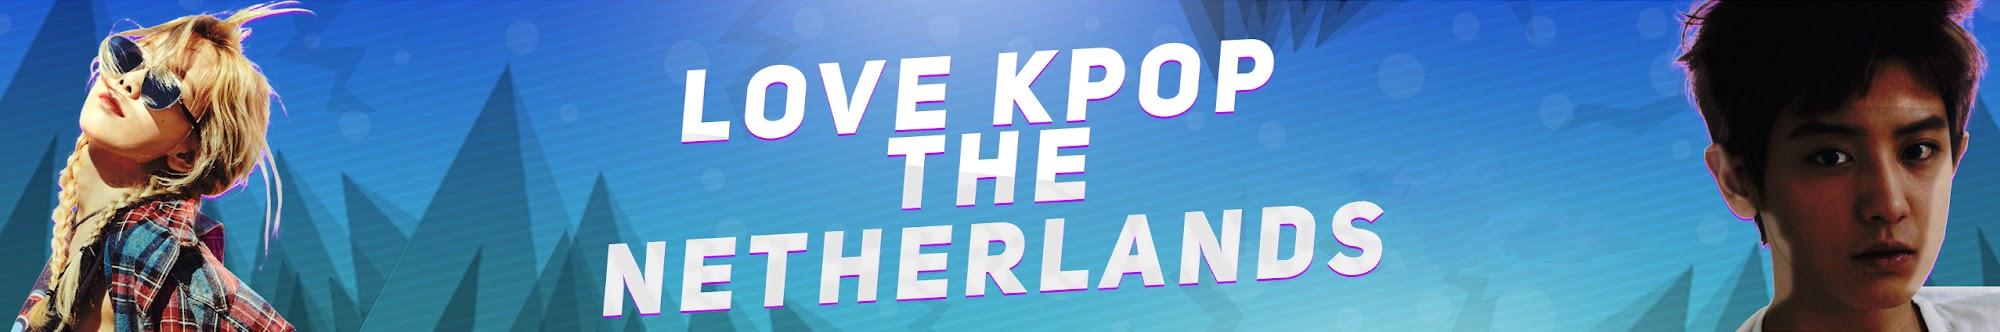 LOVE KPOP The Netherlands